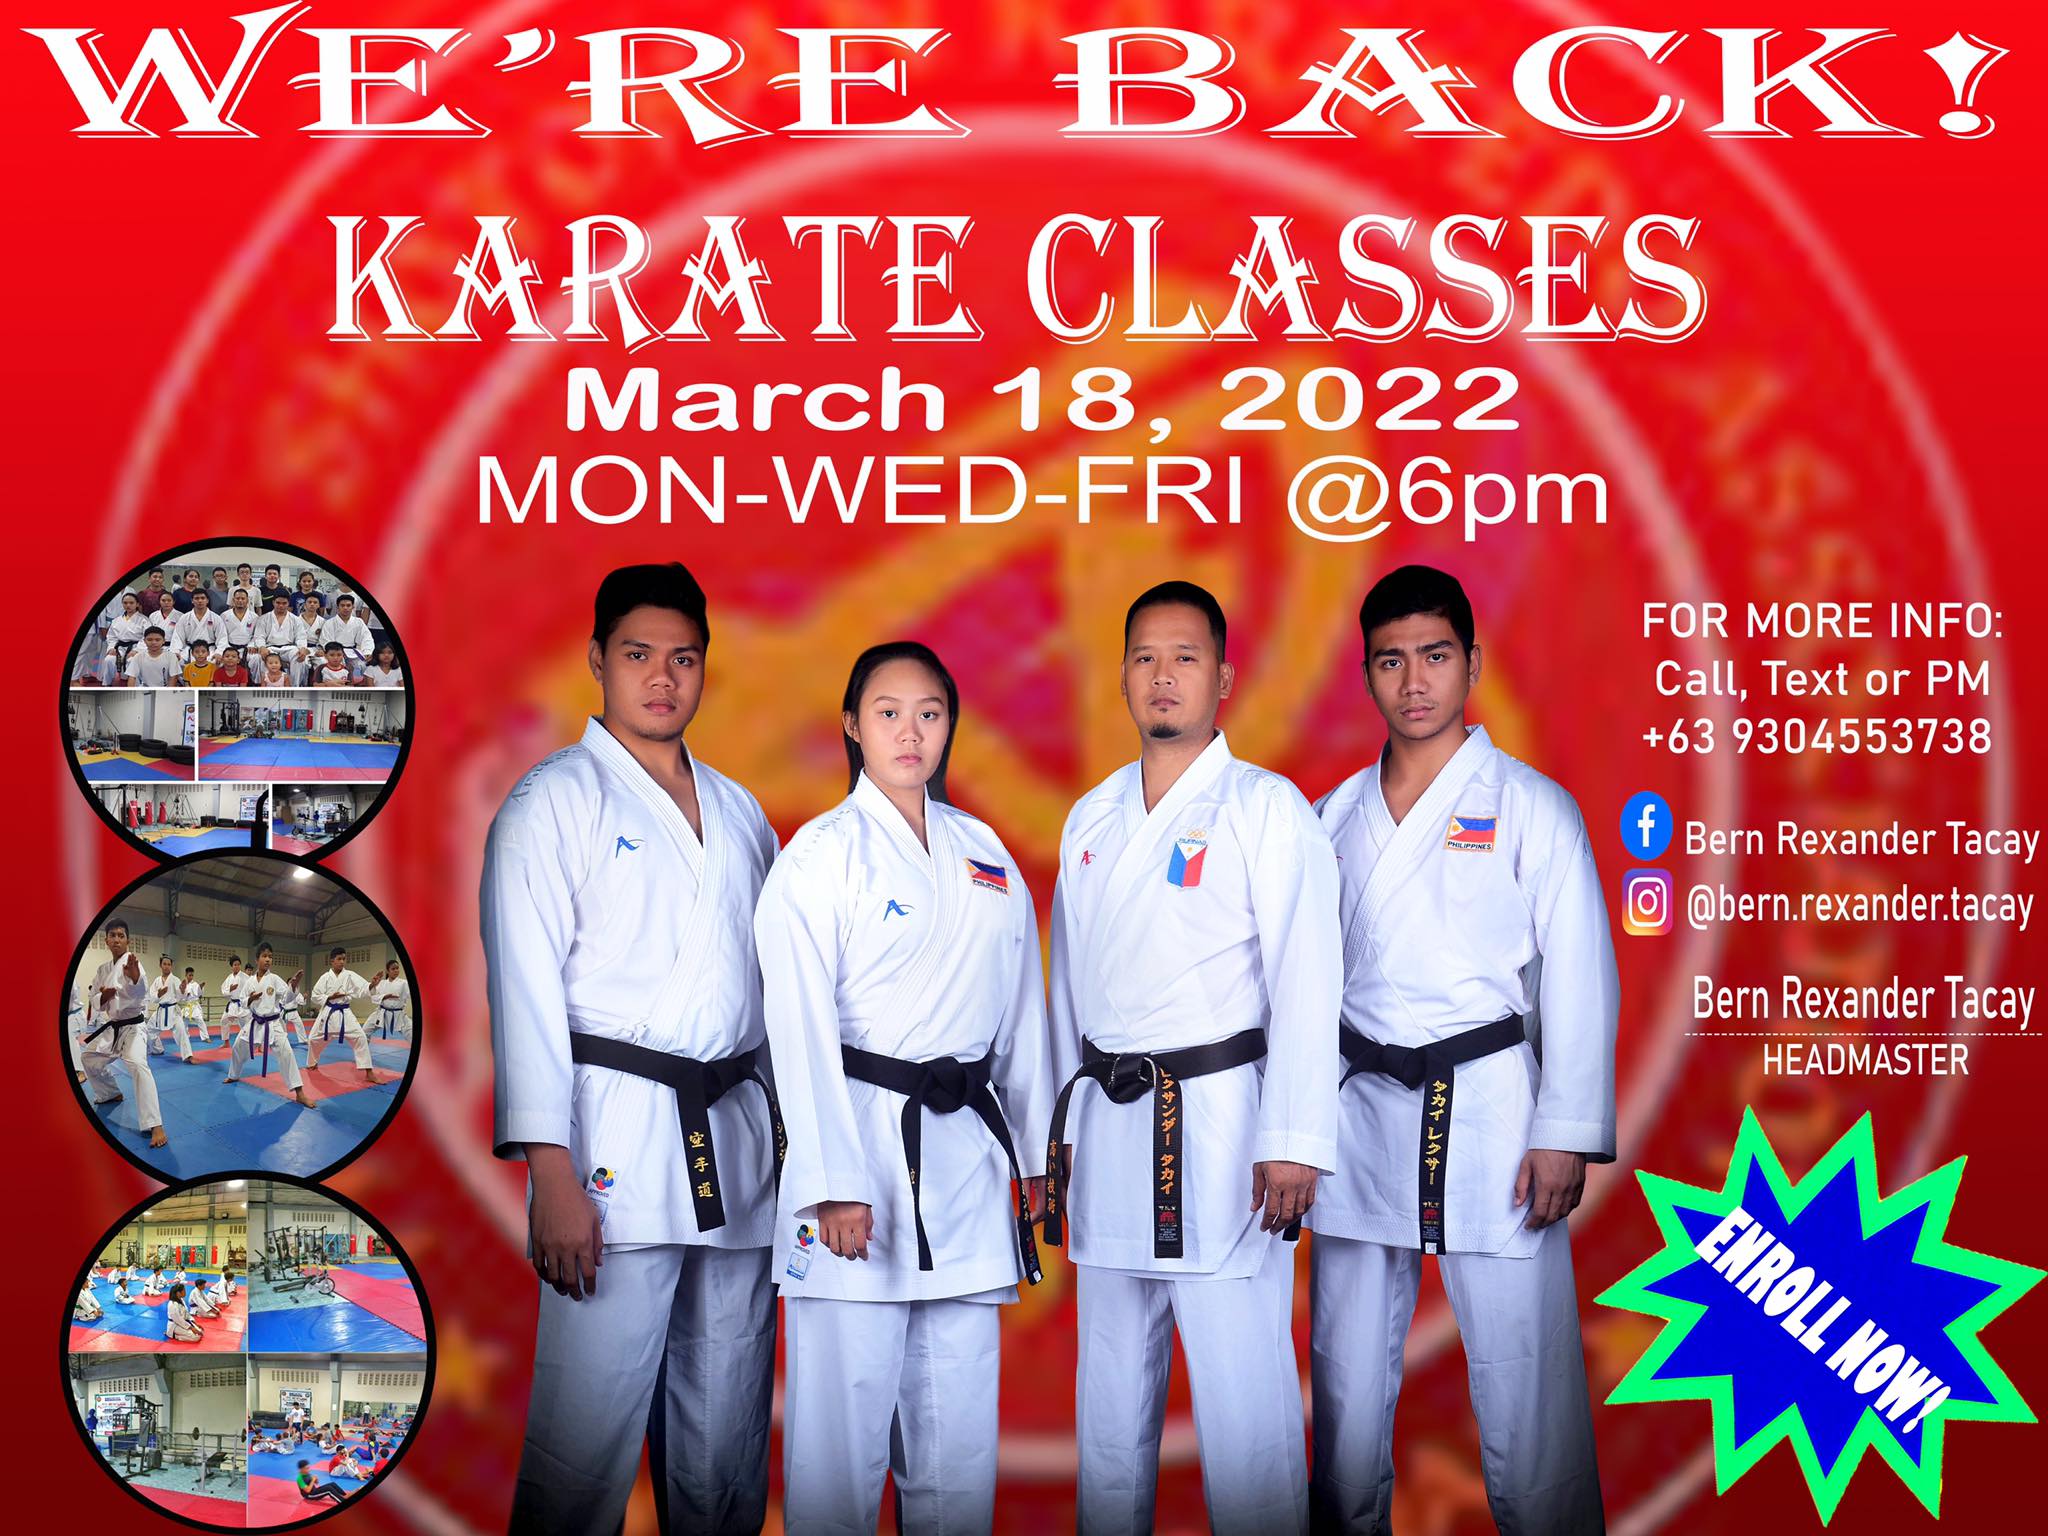 We're back! karate classes